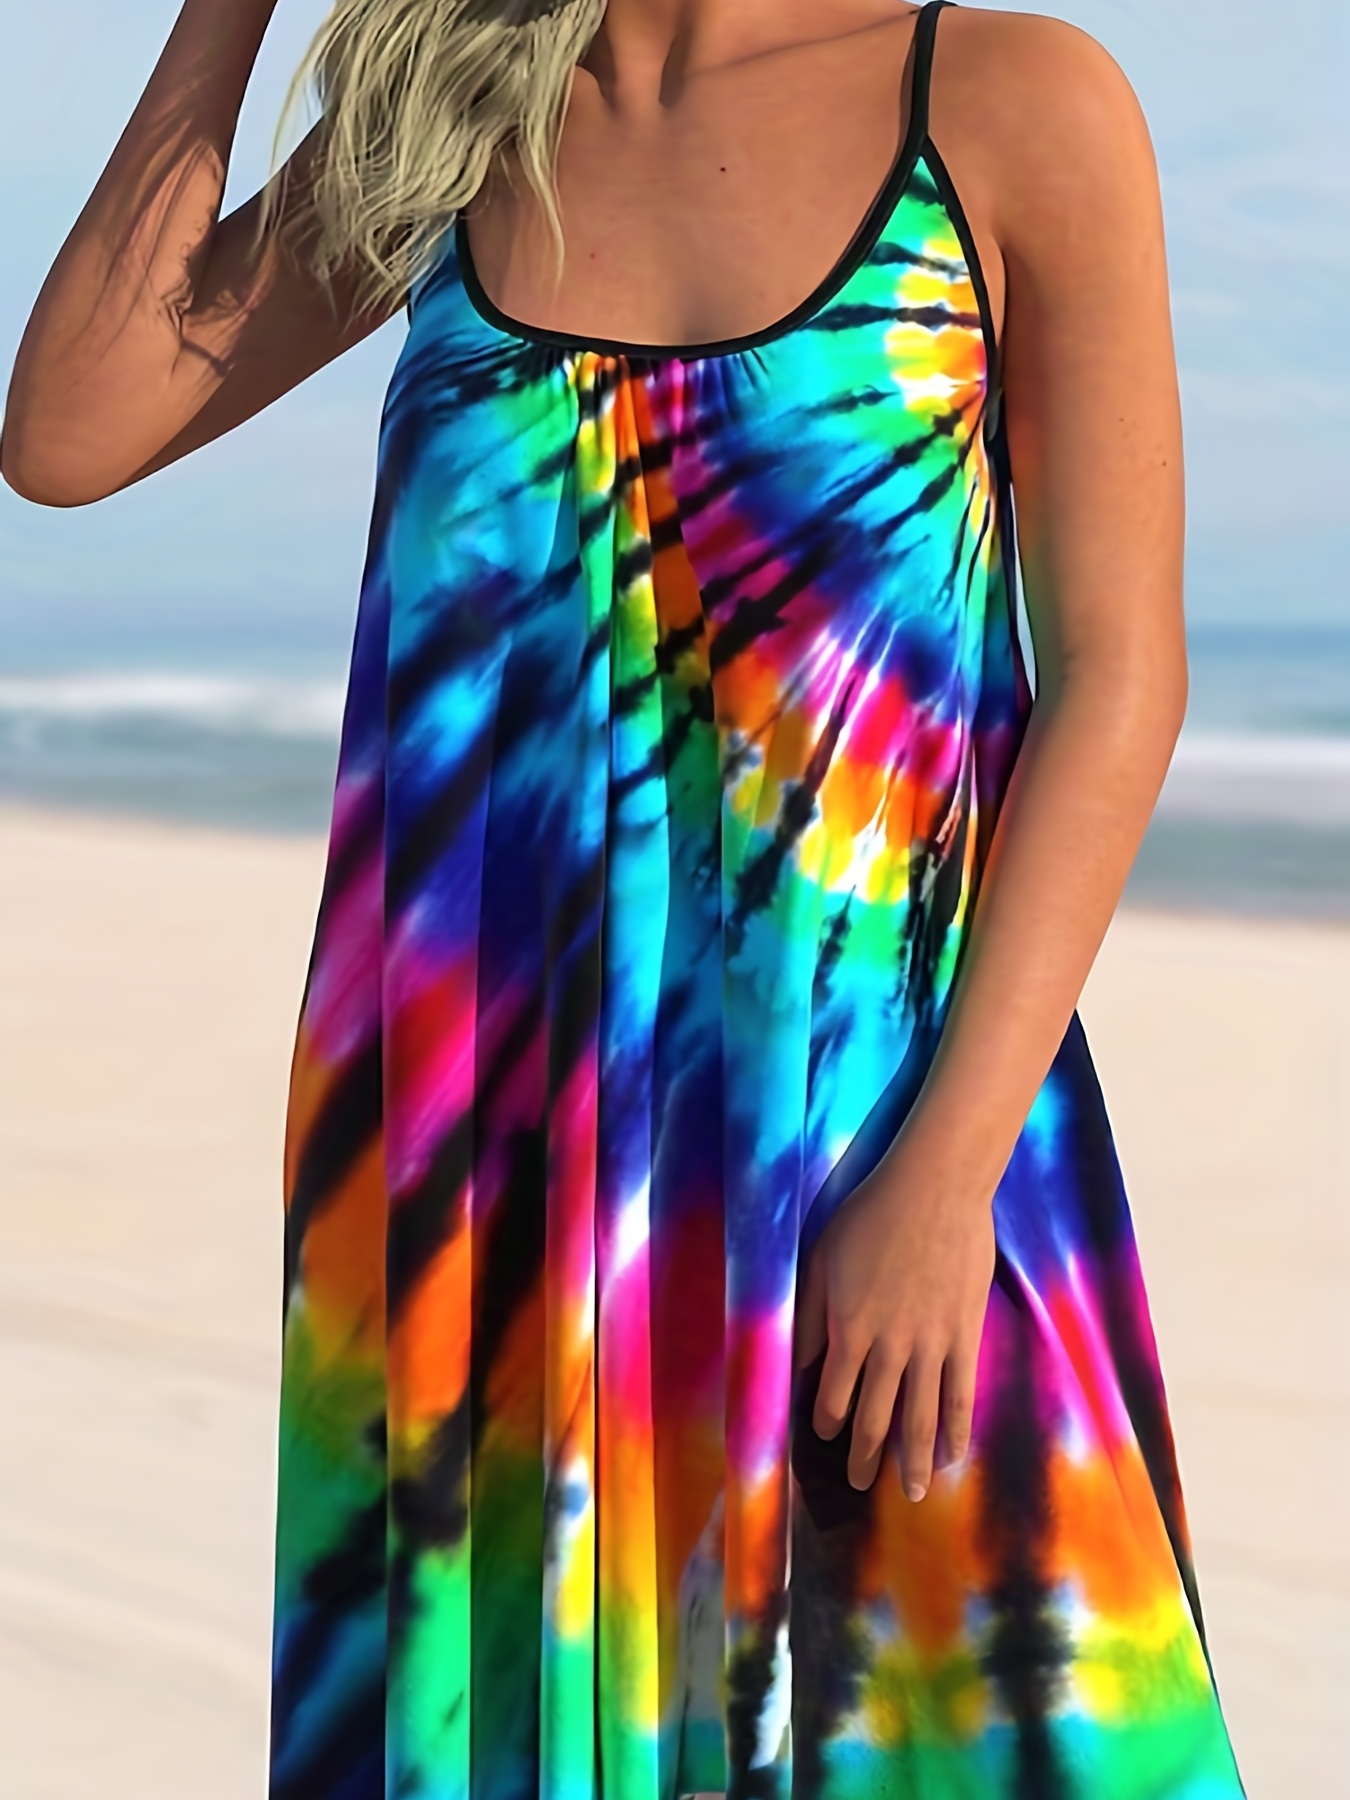 Plus Size Women's Summer Dress | Tie Dye Round Neck High Stretch Cami Dress